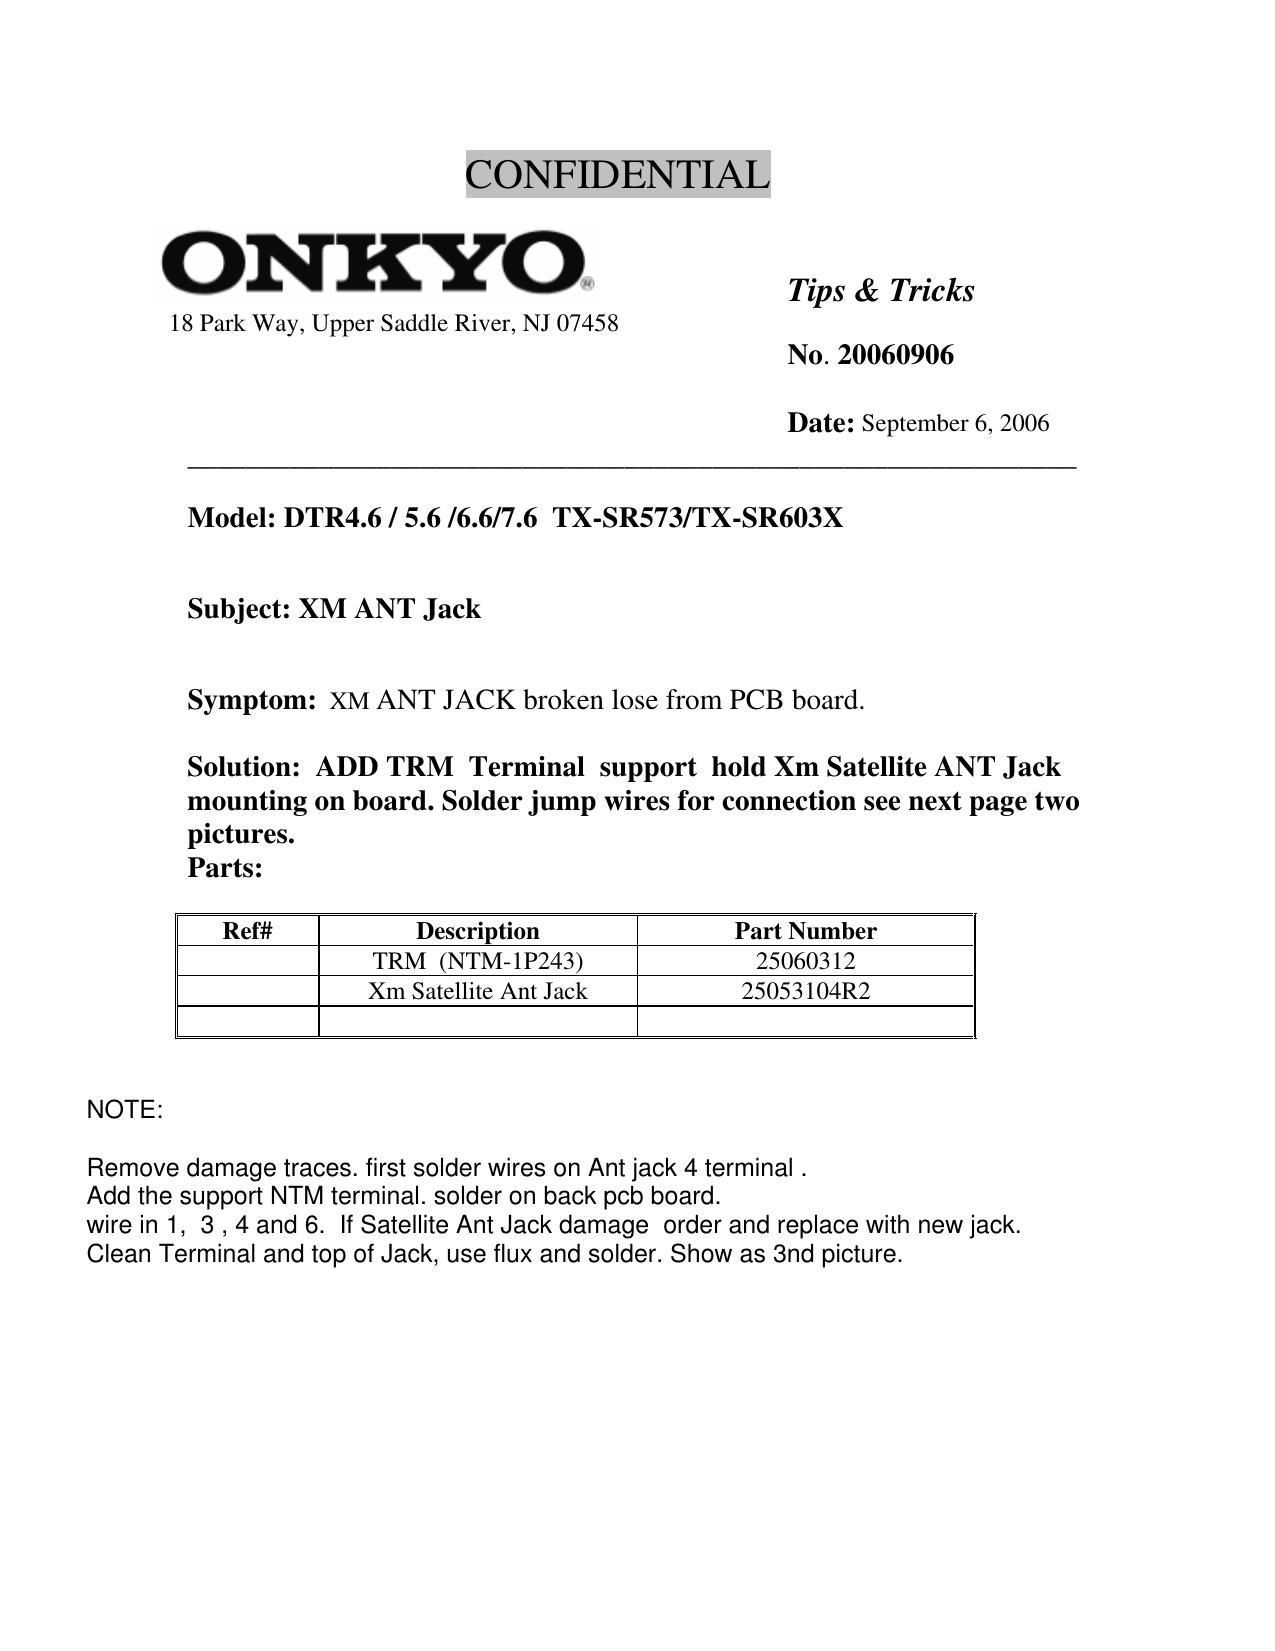 Onkyo TXRS 703 Service Information 3